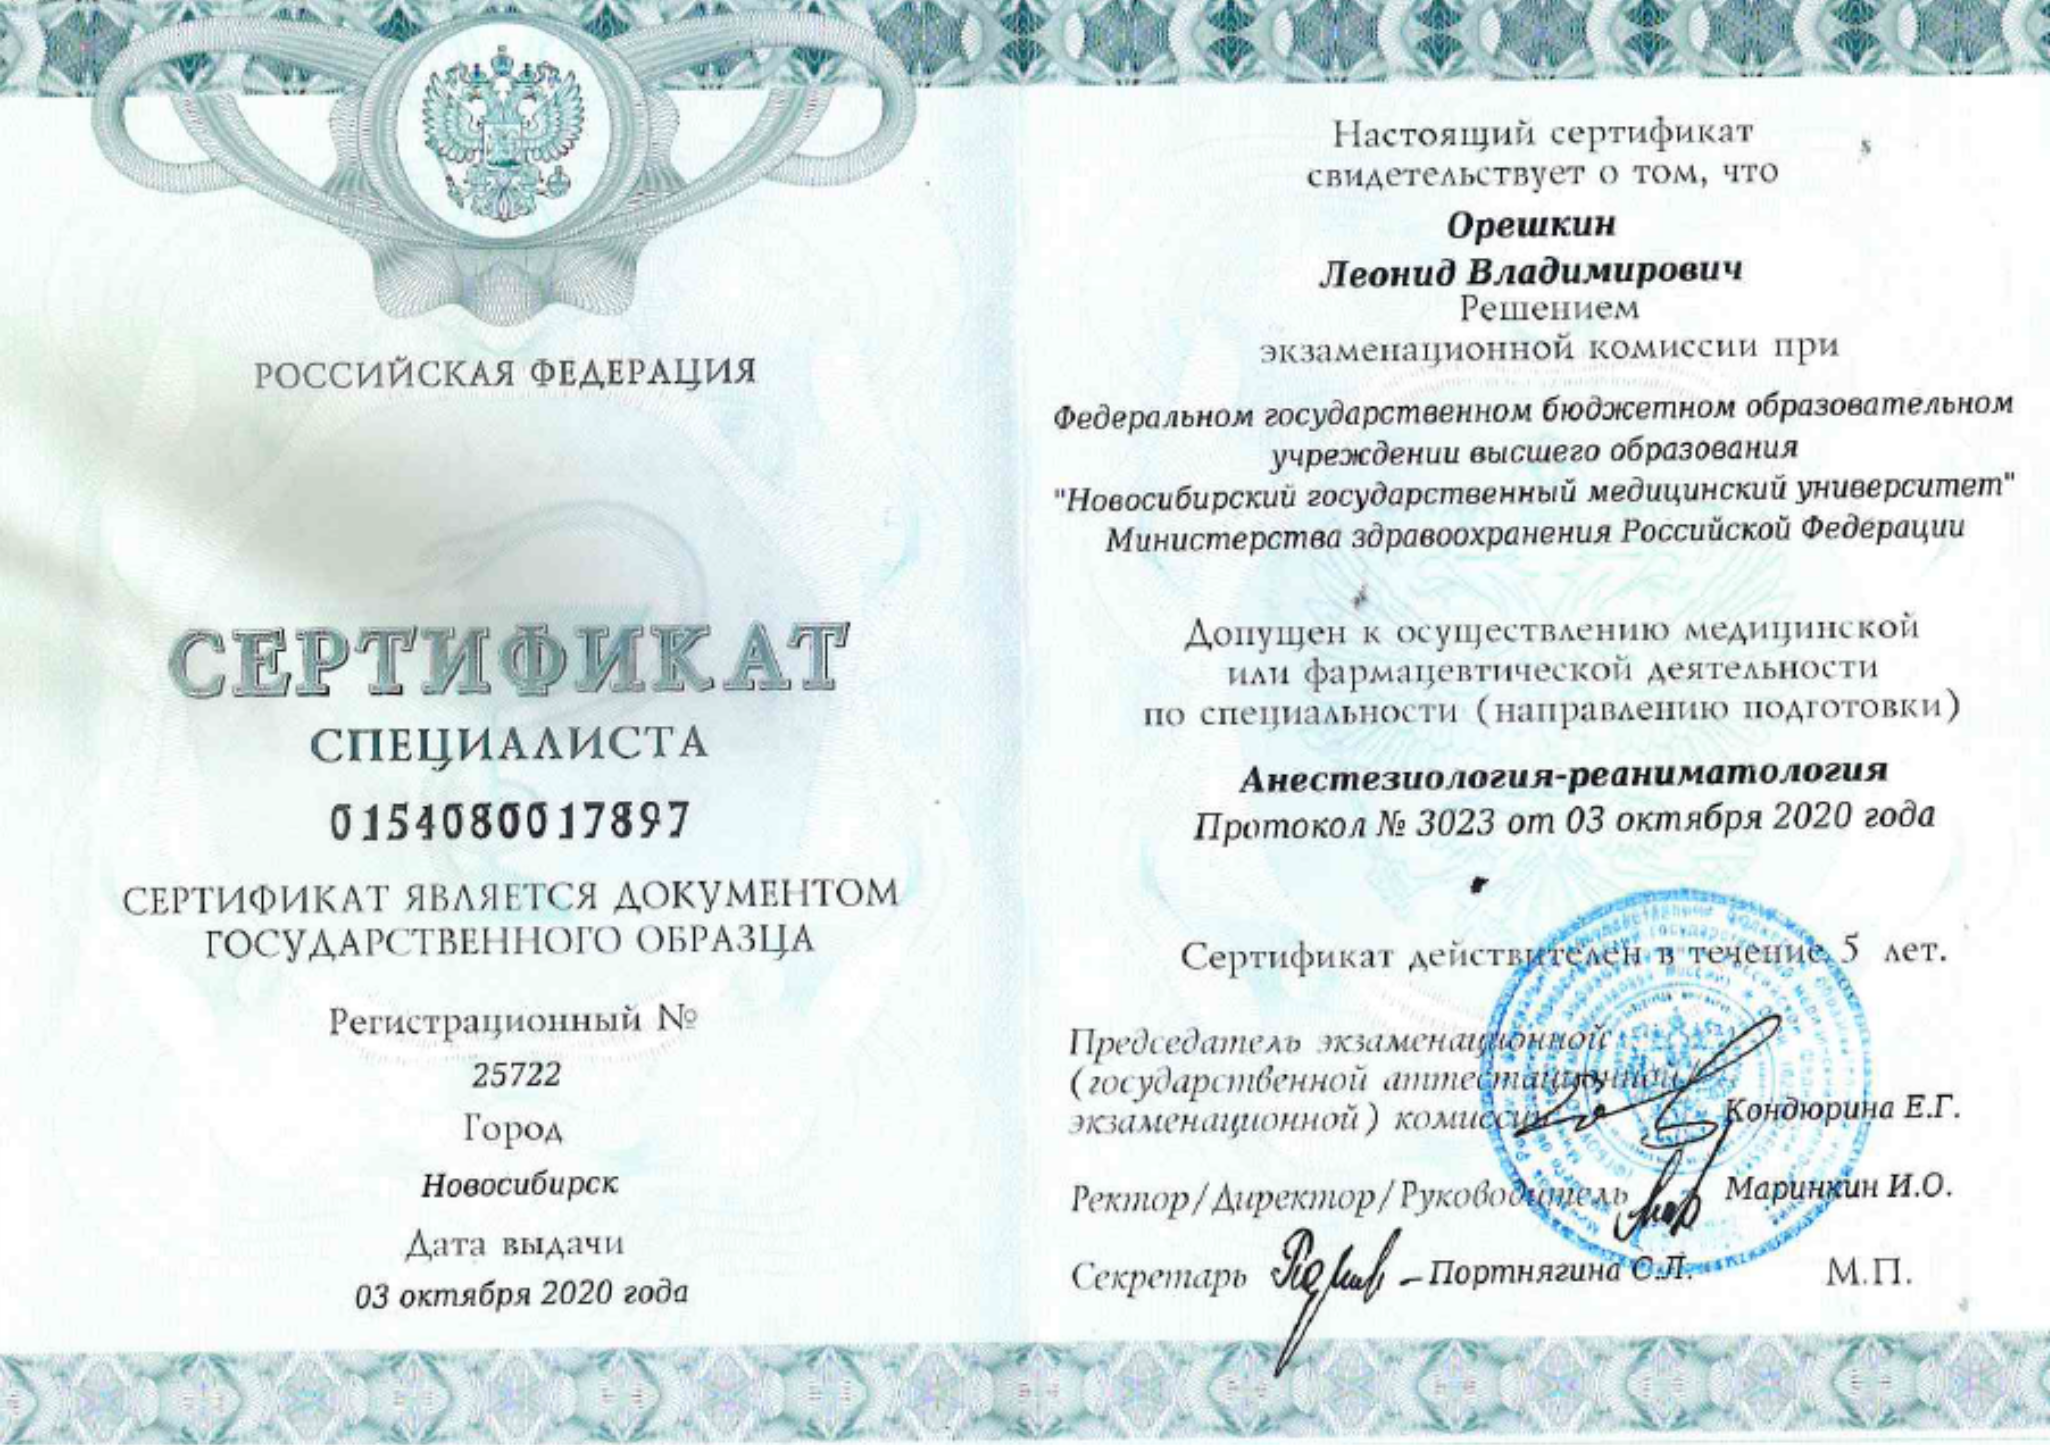 Сертификат специалиста "Анестезиология-реаниматология". 2020 г.